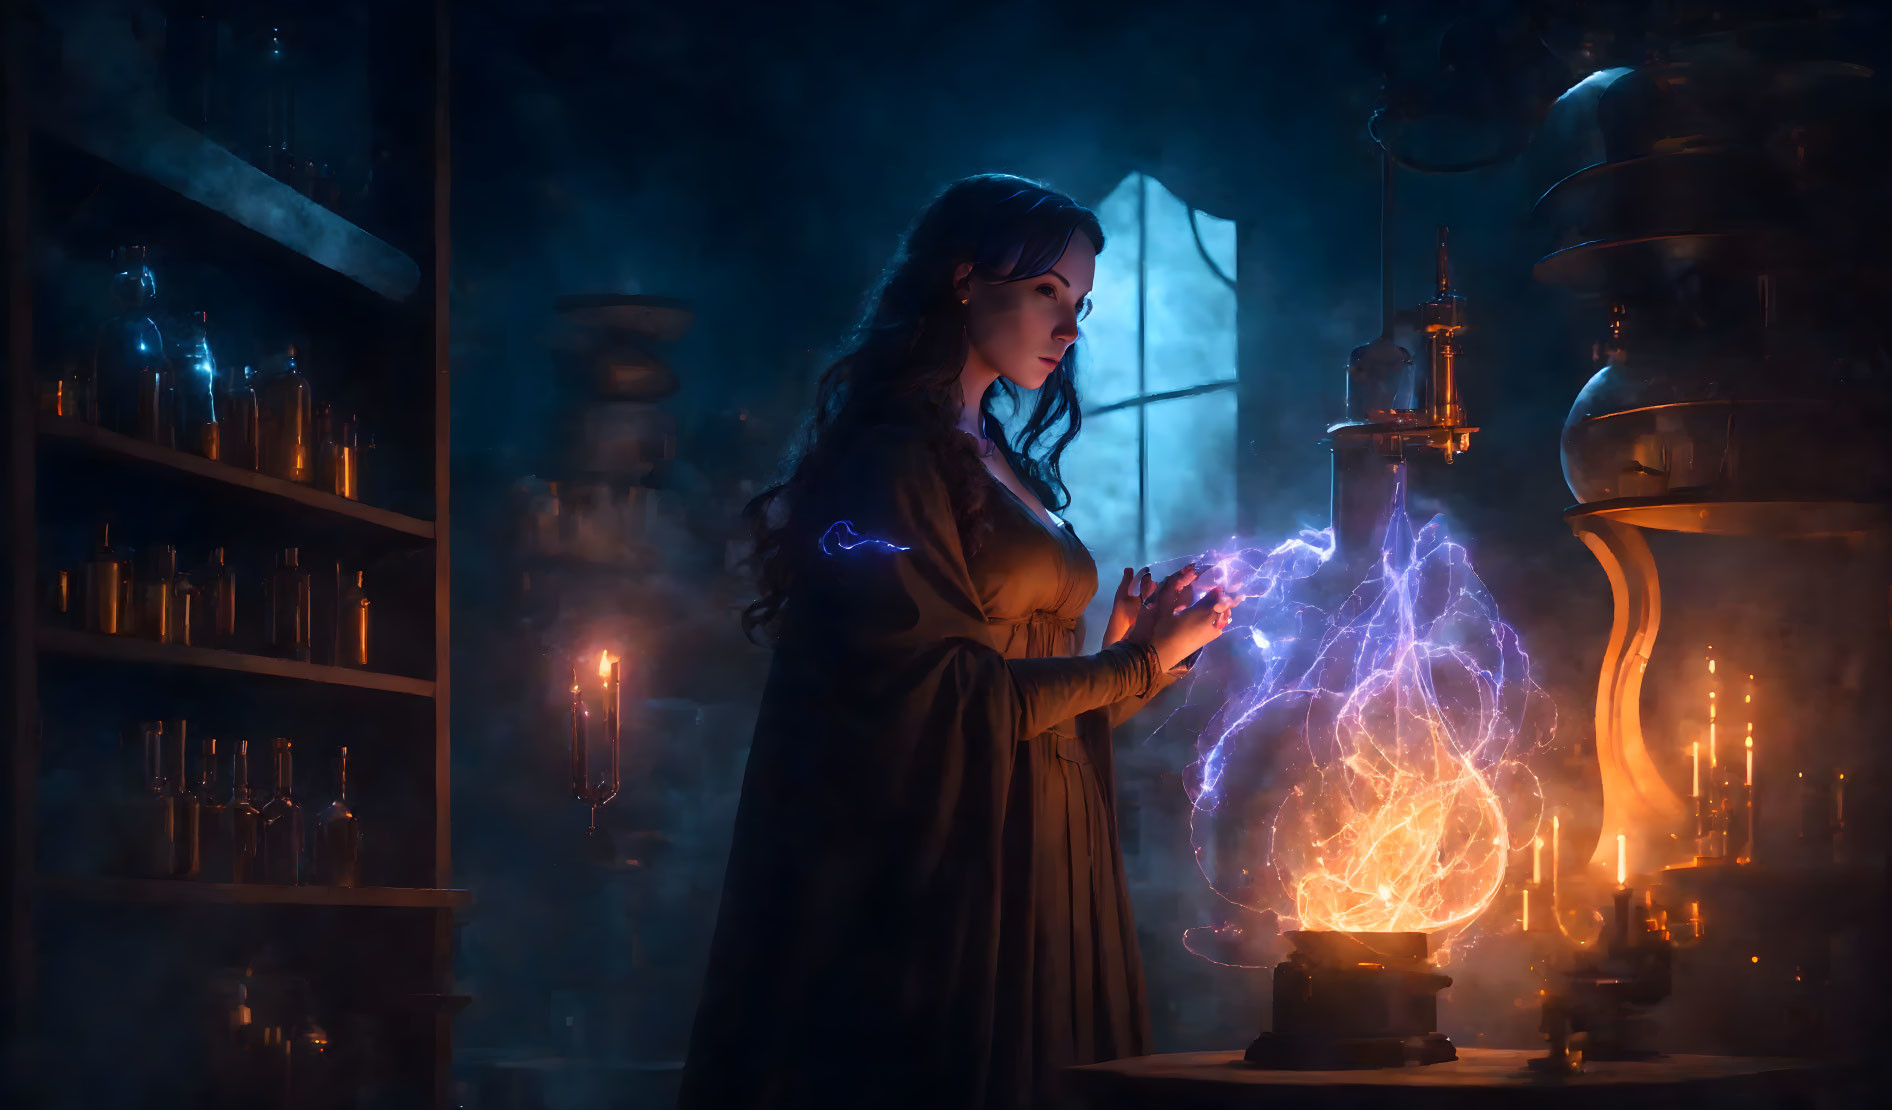 Preparing a magic potion